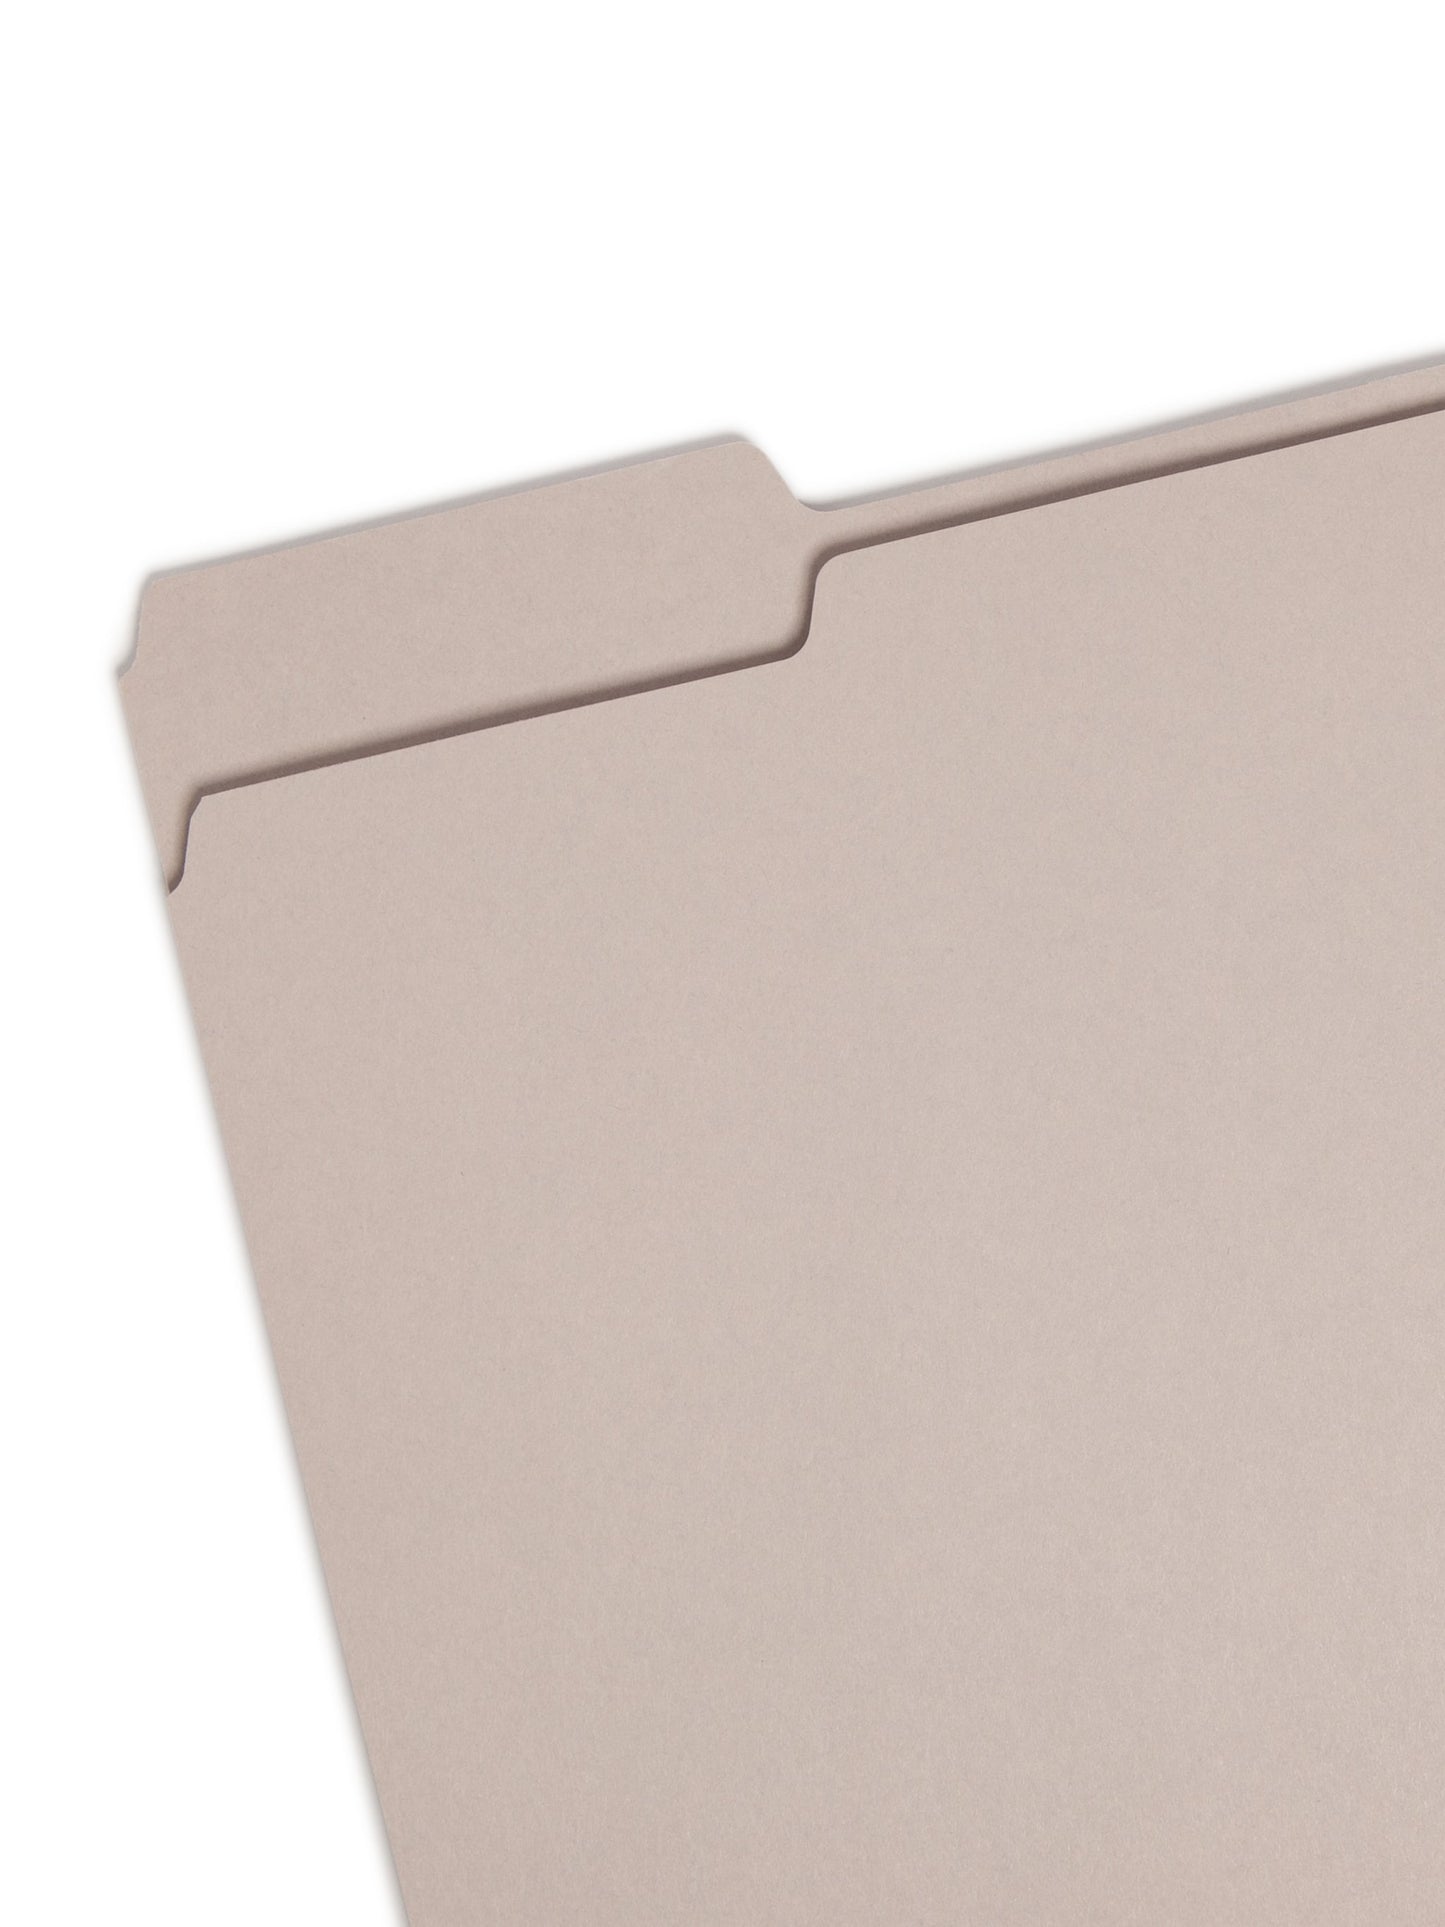 Standard File Folders, 1/3-Cut Tab, Gray Color, Letter Size, Set of 100, 086486123433